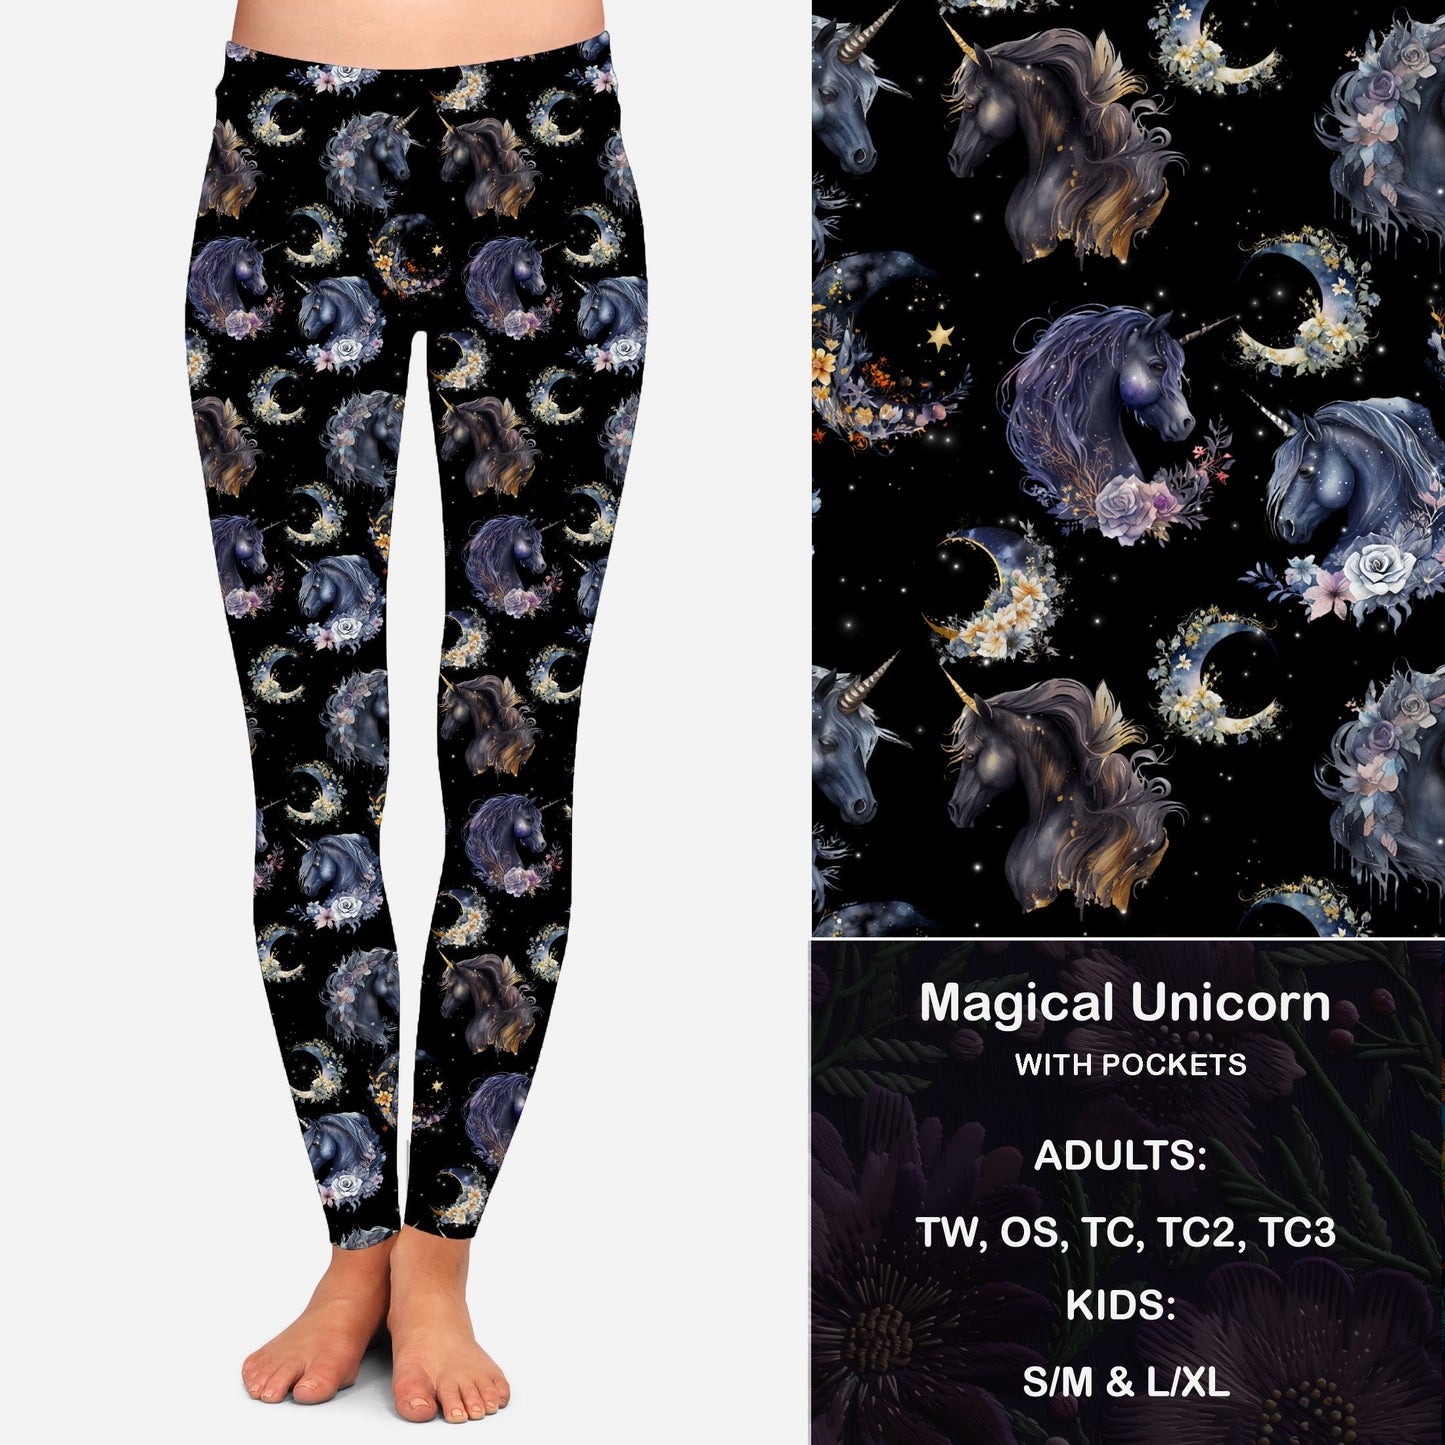 Magical Unicorn Leggings with Pockets